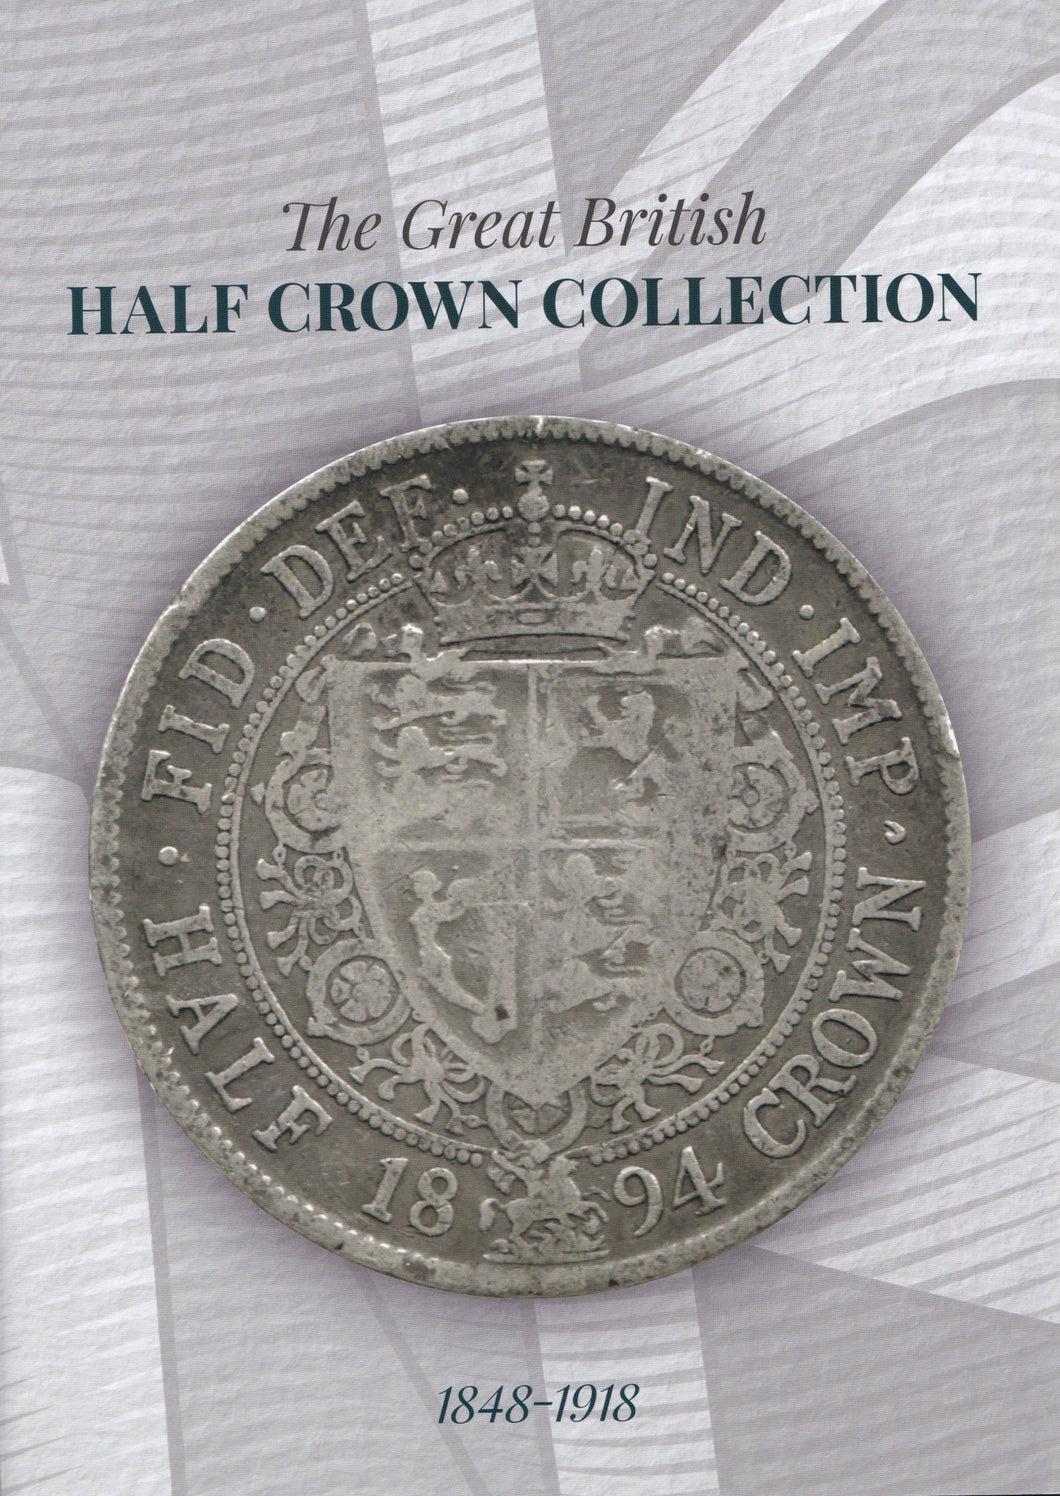 NEW 1848 - 1918 Great British Halfcrown Half Crown Coin Hunt Collectors Album - Coin Album - Cambridgeshire Coins